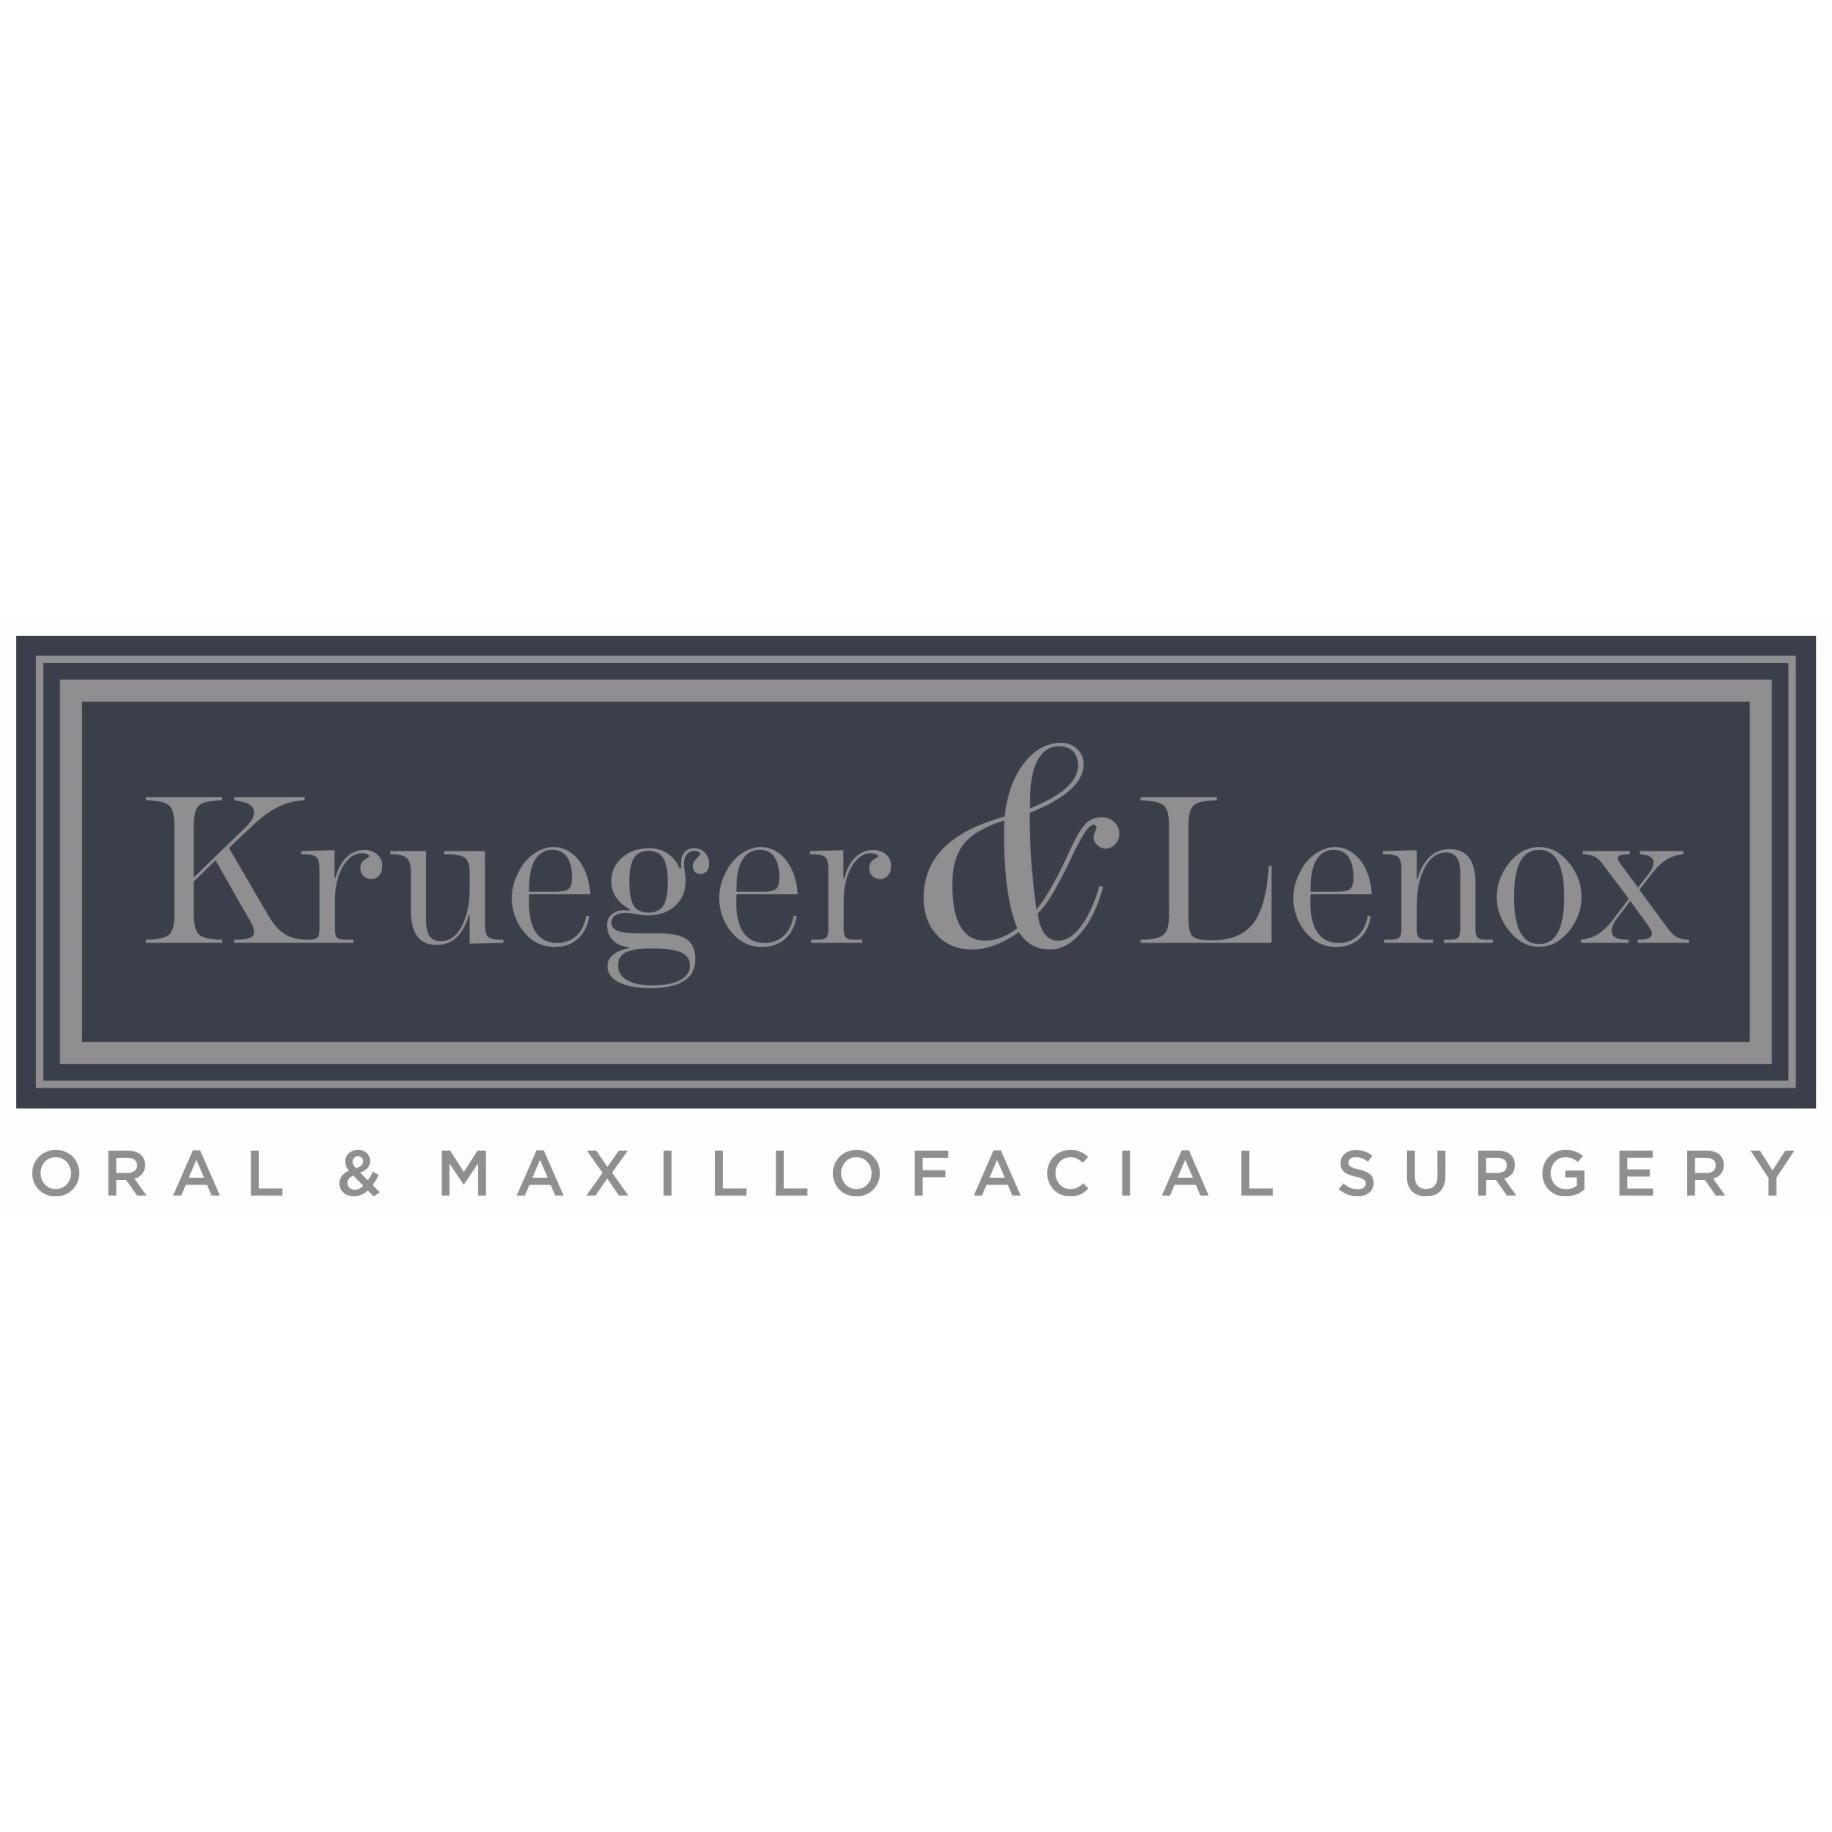 Krueger & Lenox: Oral & Maxillofacial Surgery Logo